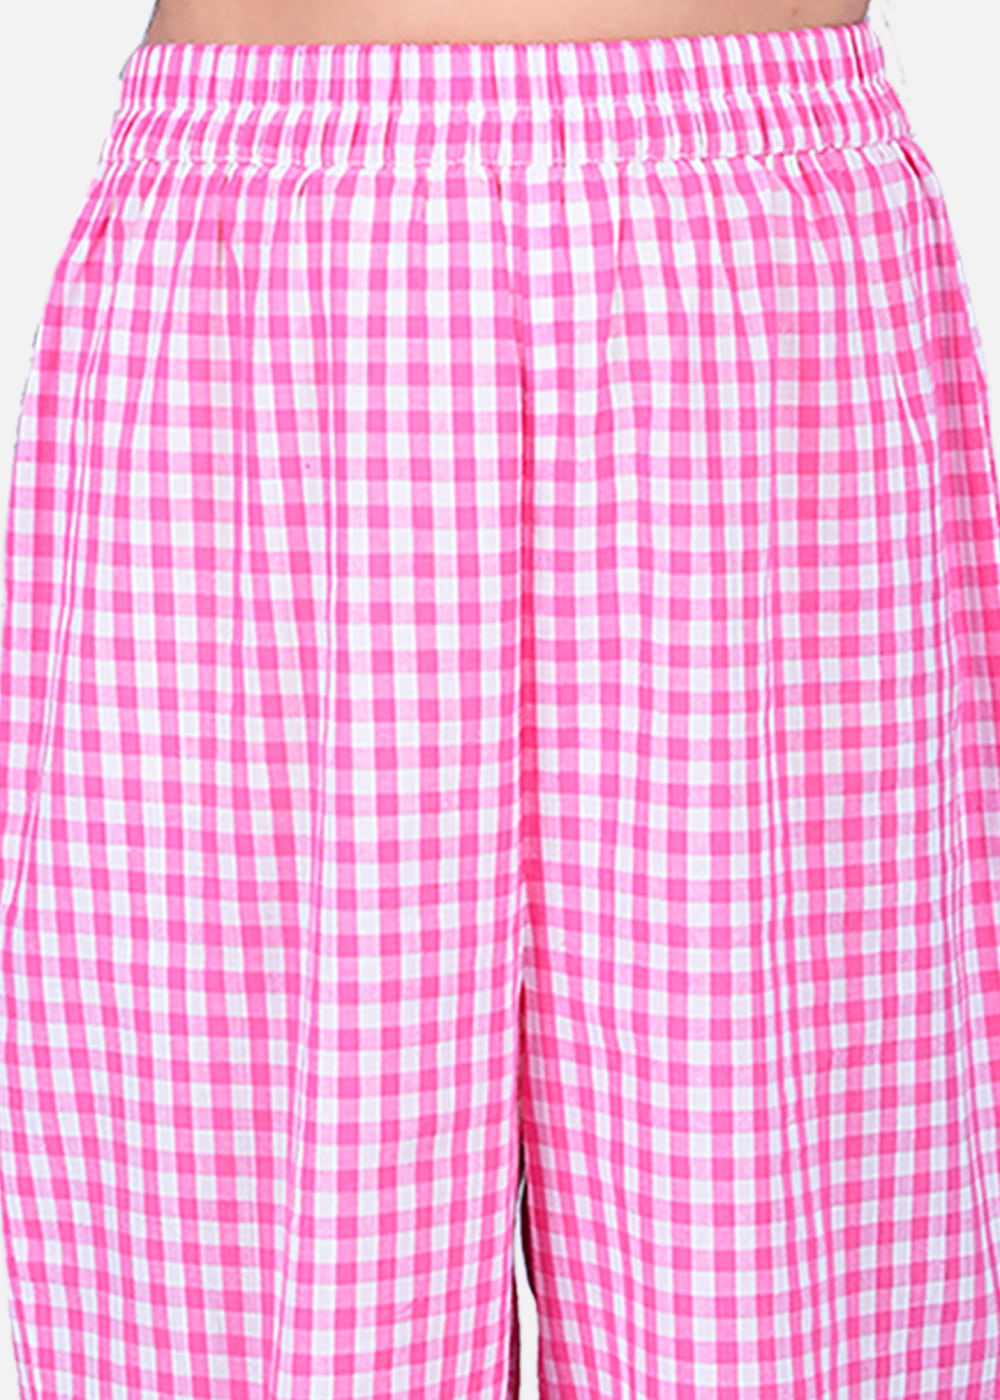 Blanc9 Pink Shoulder Frill Checkered Nightwear